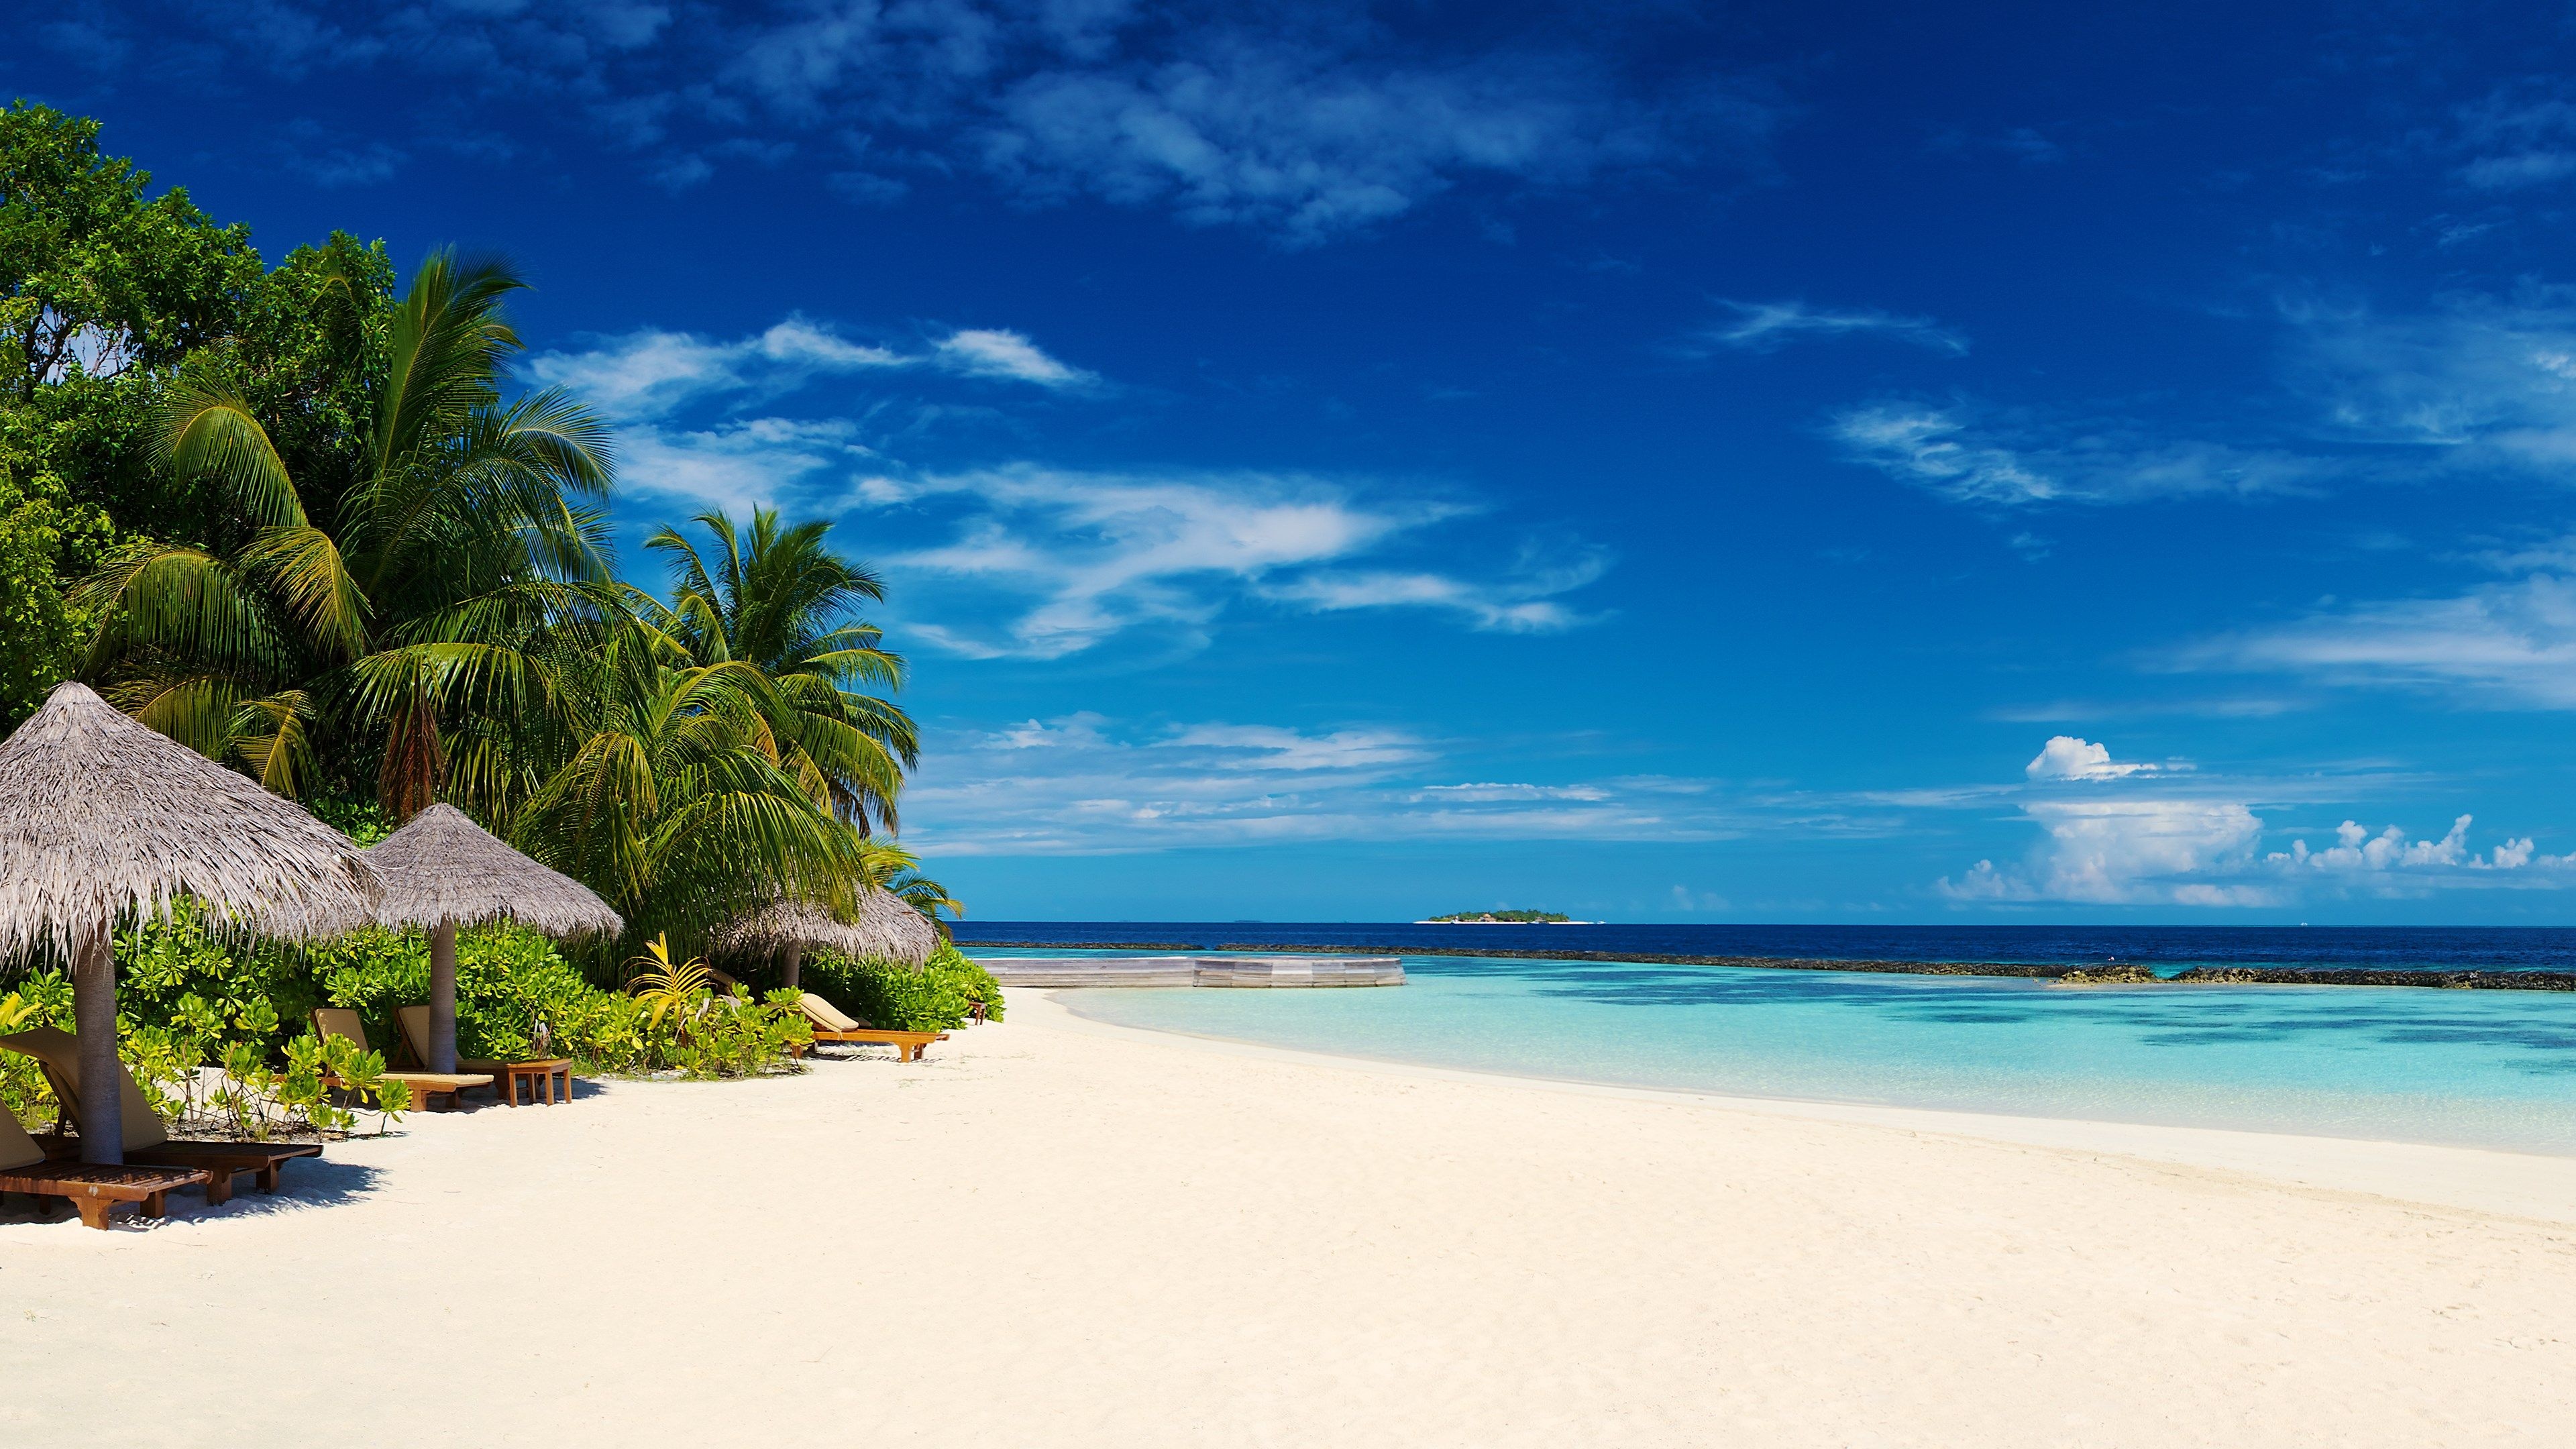 Best wallpaper, Island paradise, Beach vibes, Maldives dreams, 3840x2160 4K Desktop